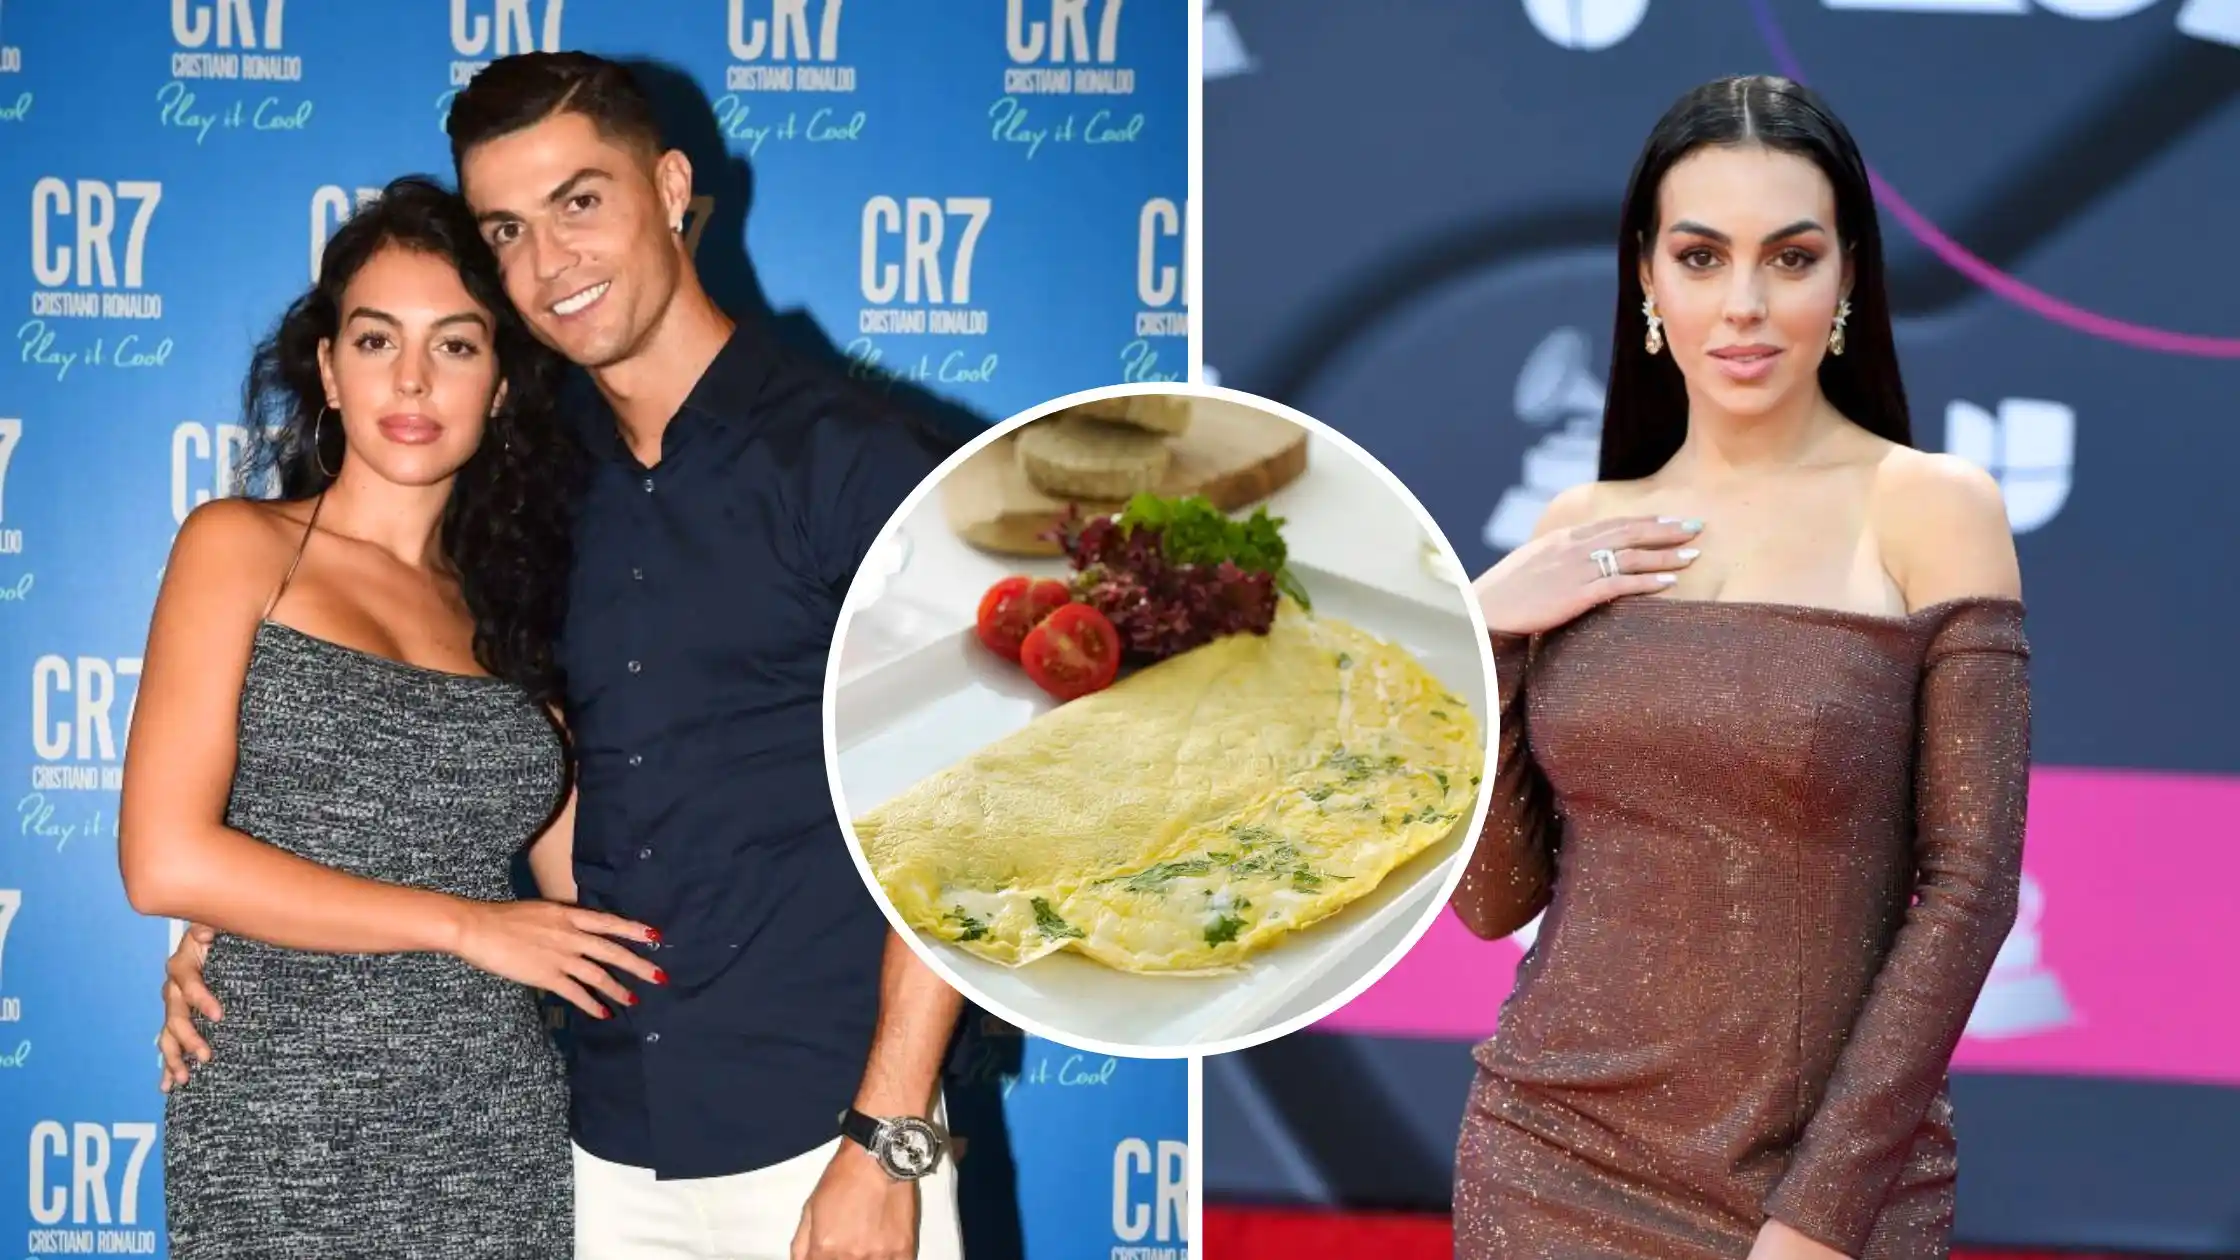 Cristiano Ronaldo's Girlfriend Georgina Rodriguez's Mysterious Diet